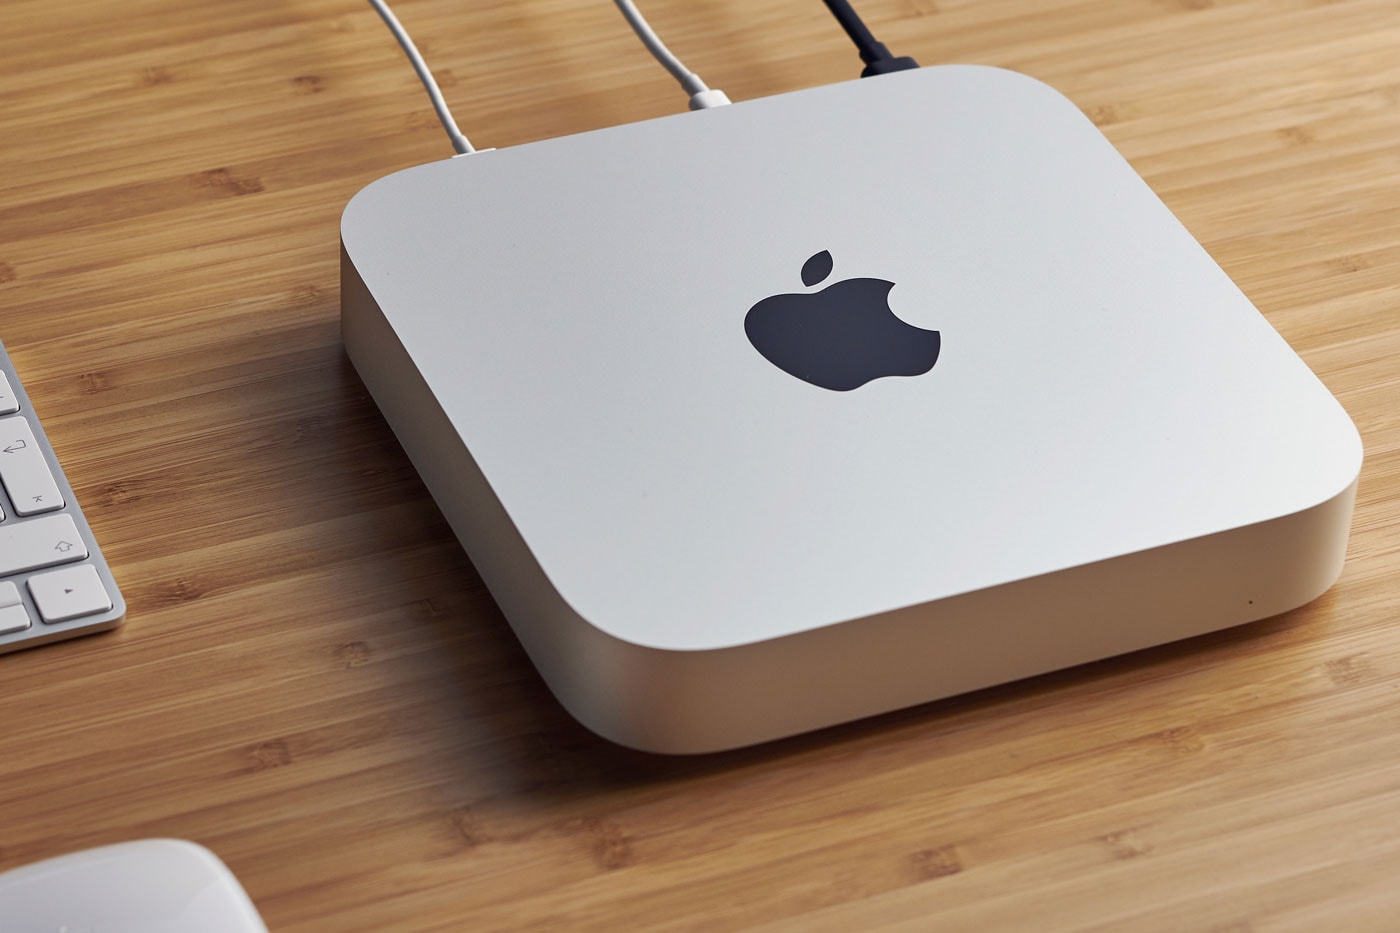 Apple Rumored To Develop "Mac Studio" Desktop With 7K Display mac mini m1 max processor afoordable apple monitor 